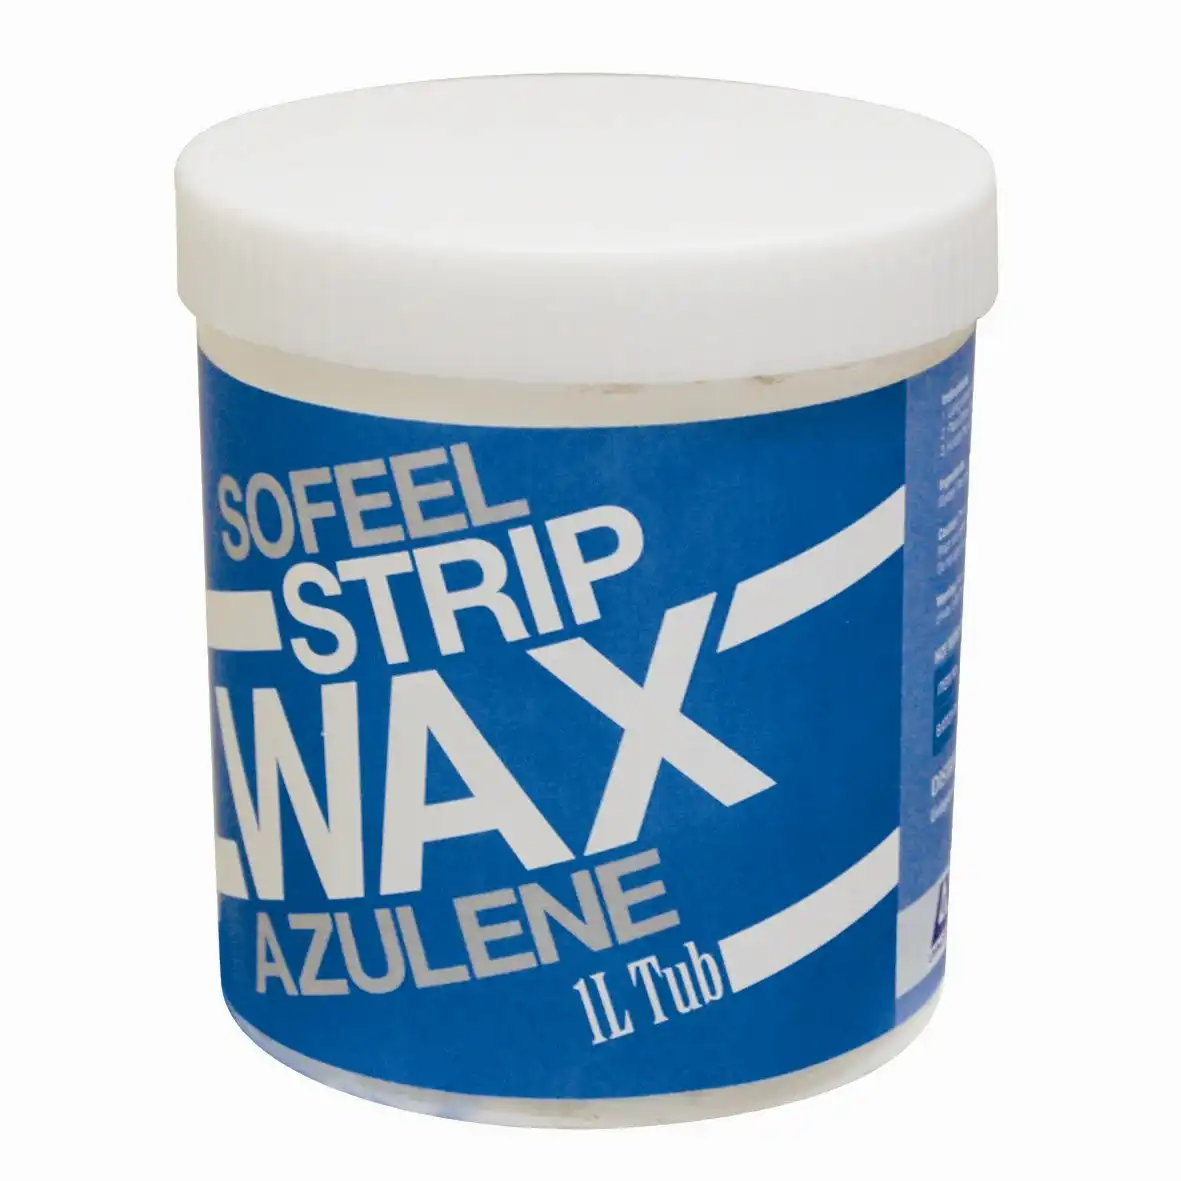 Sofeel Strip Wax Azurelene 1L Tub